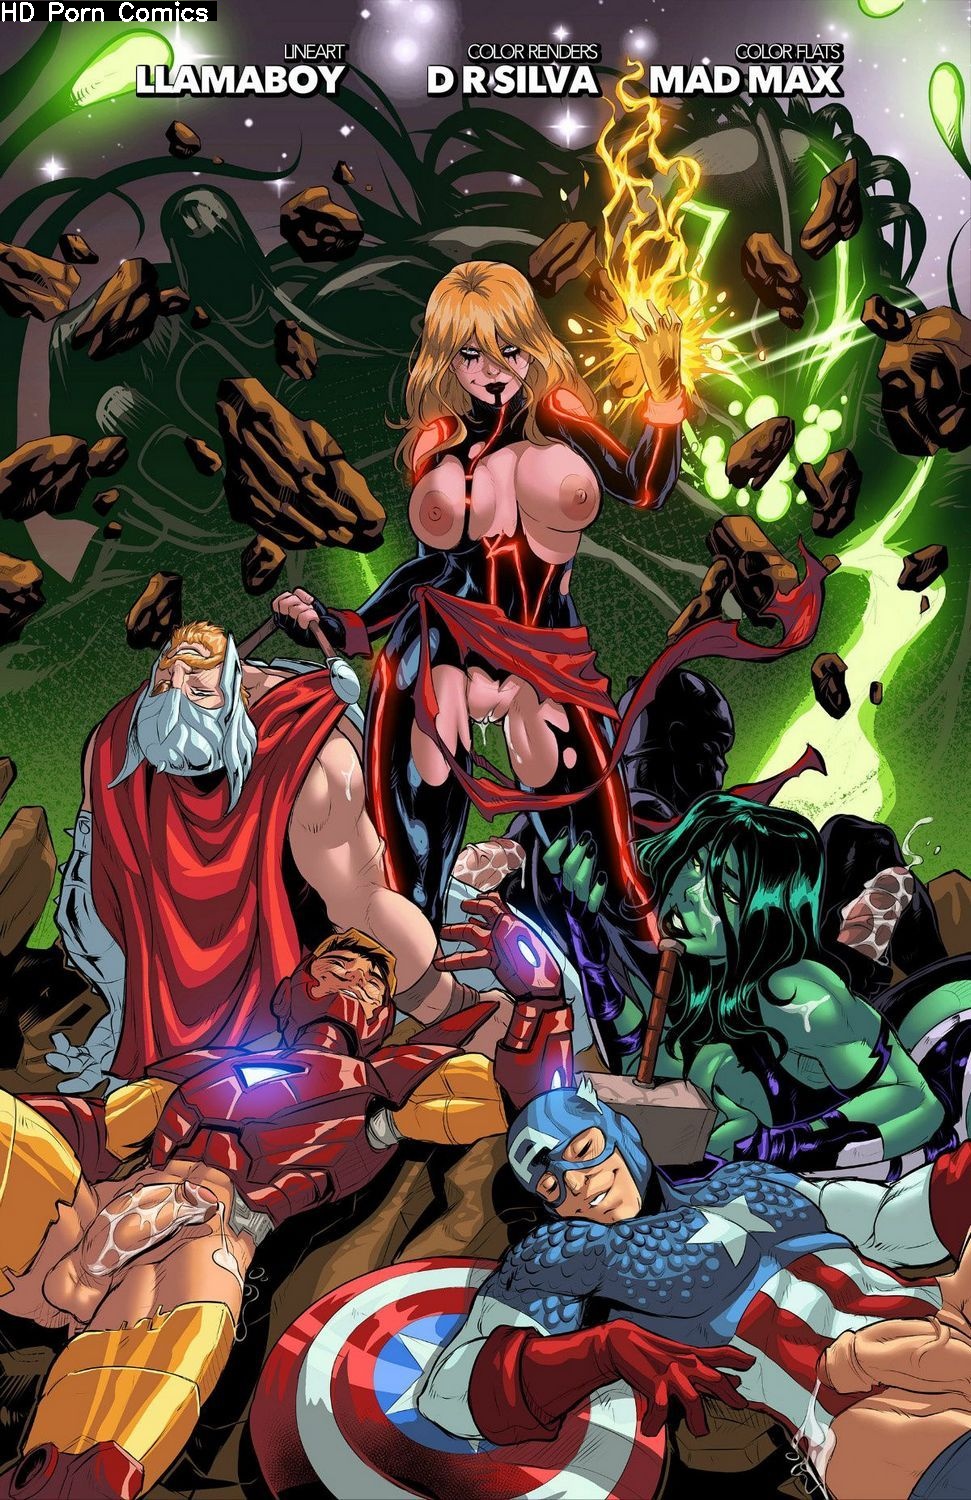 Avengers Sex Video Cartoon - Captain Marvel - The Lust Avenger comic porn | HD Porn Comics